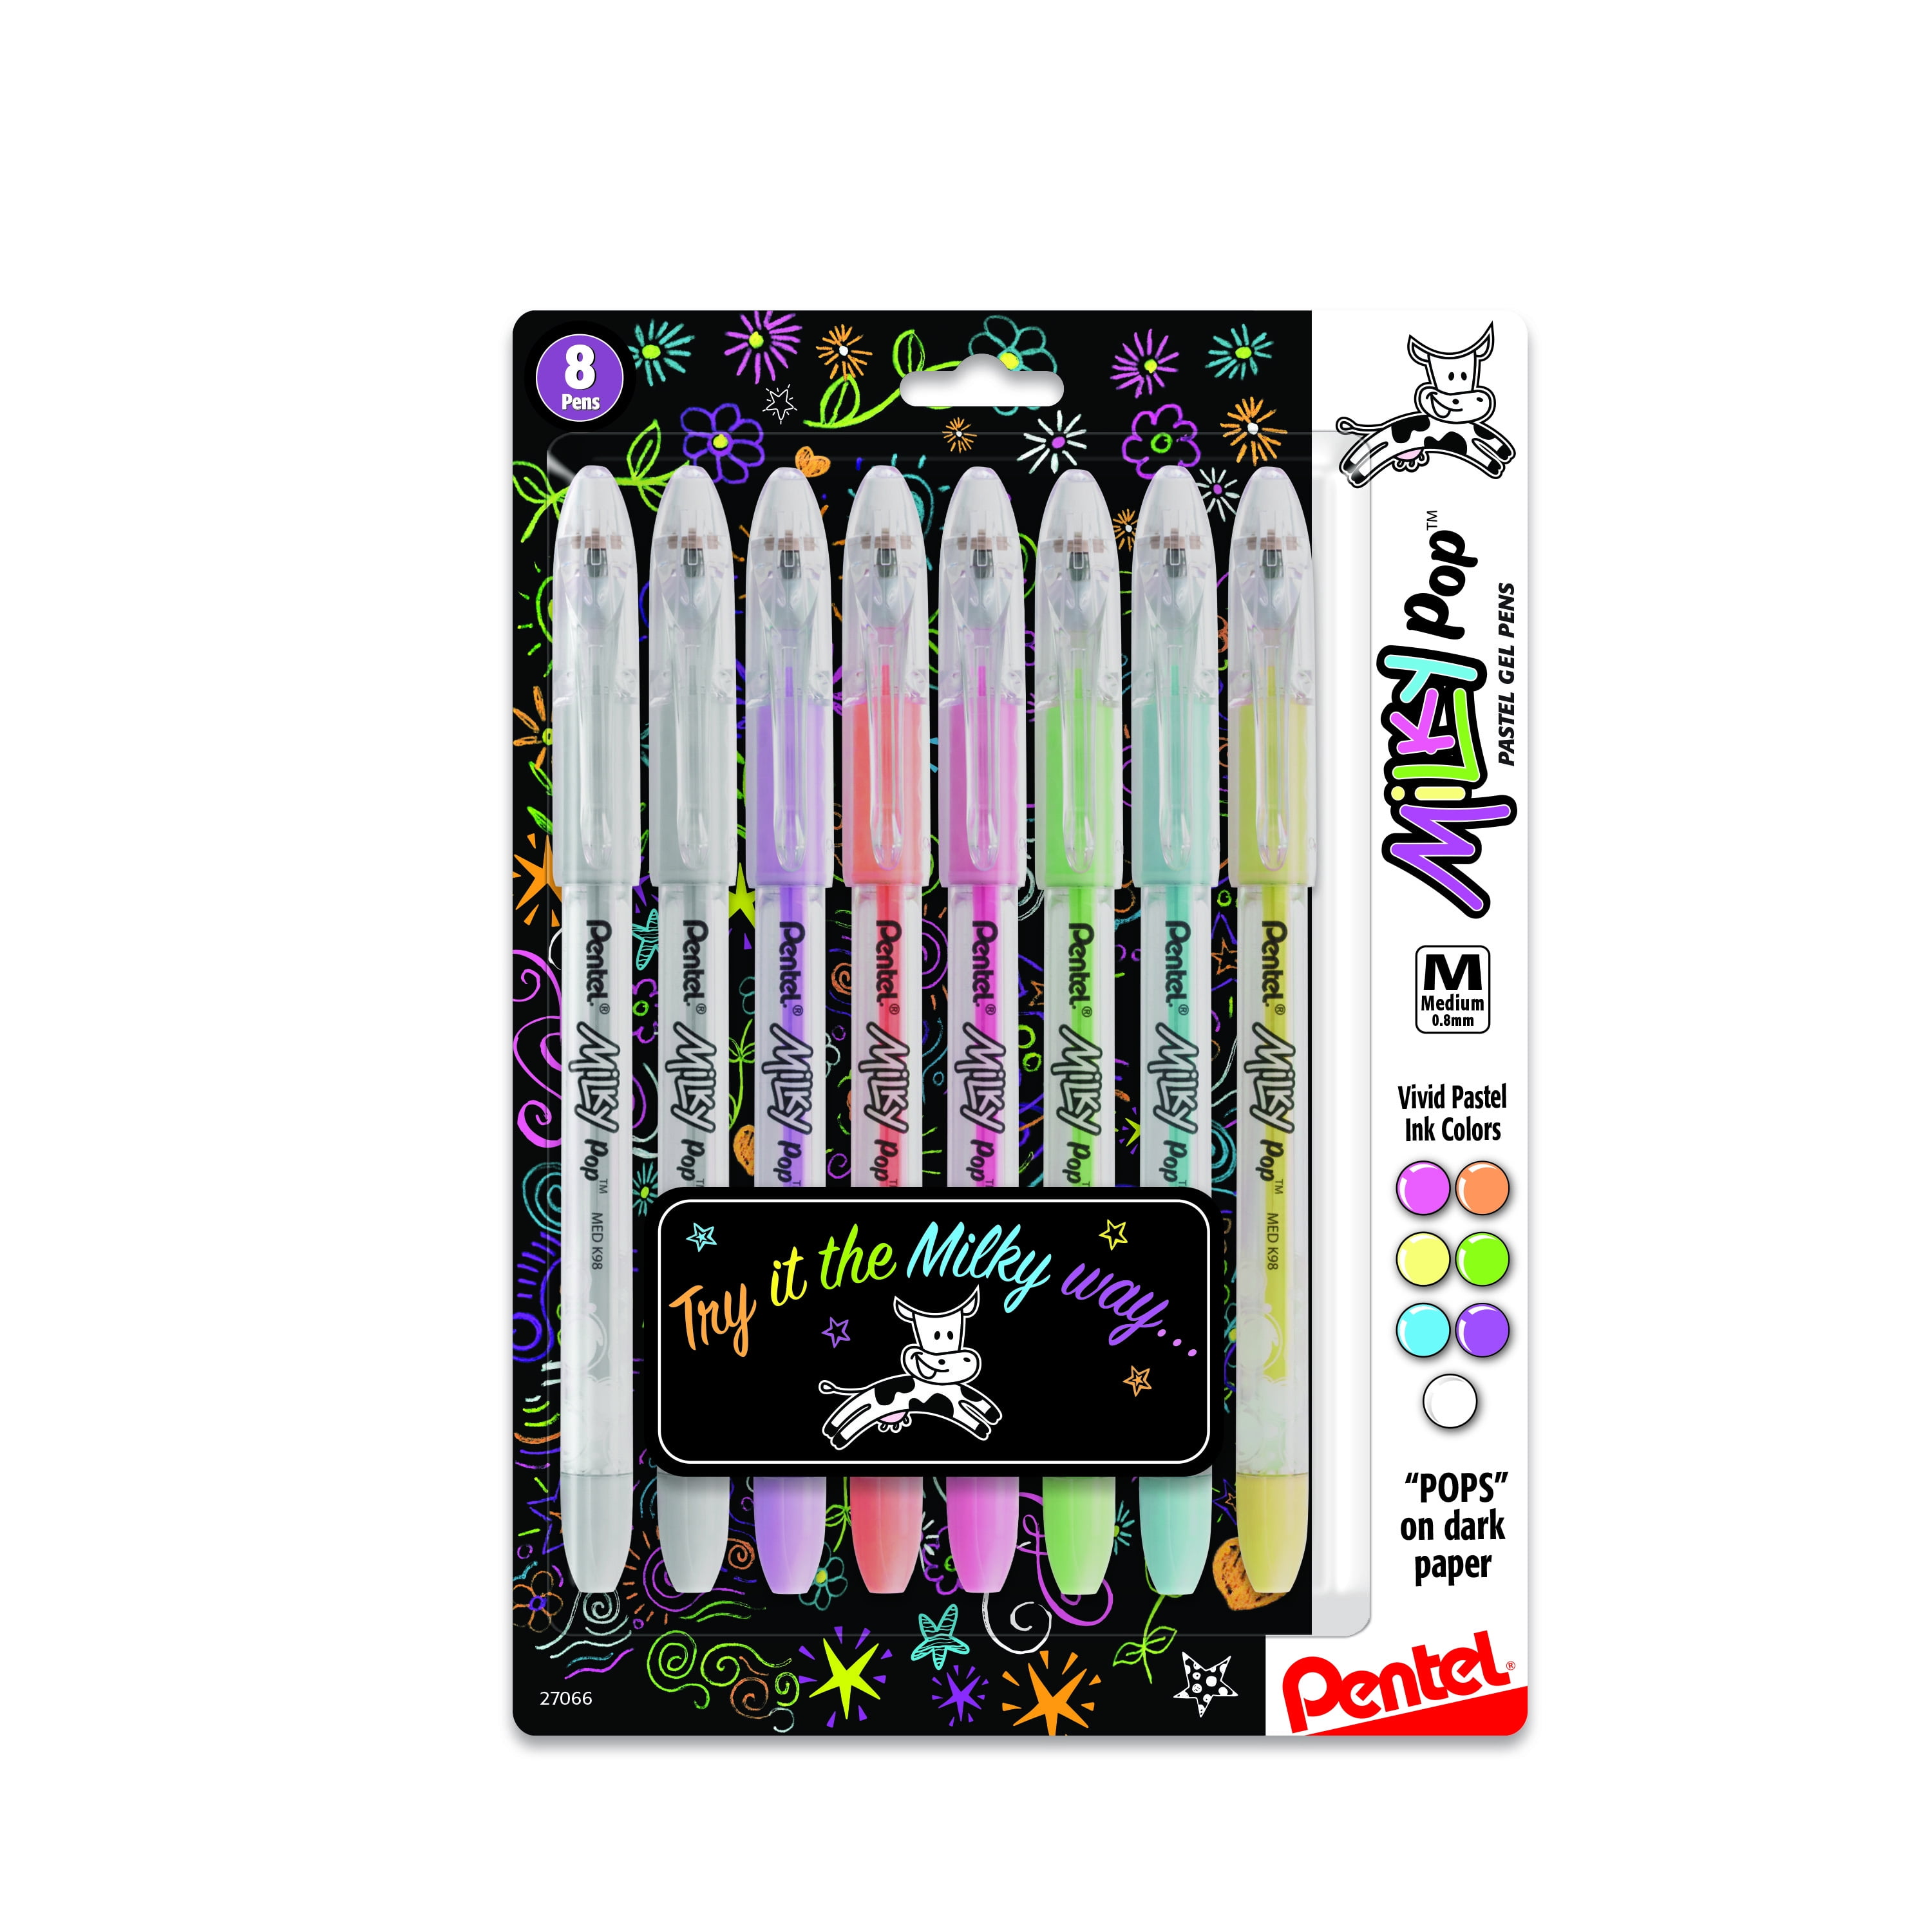 Pentel Sunburst Metallic Gel Pen 0.8mm Medium Tip Assorted Colors 